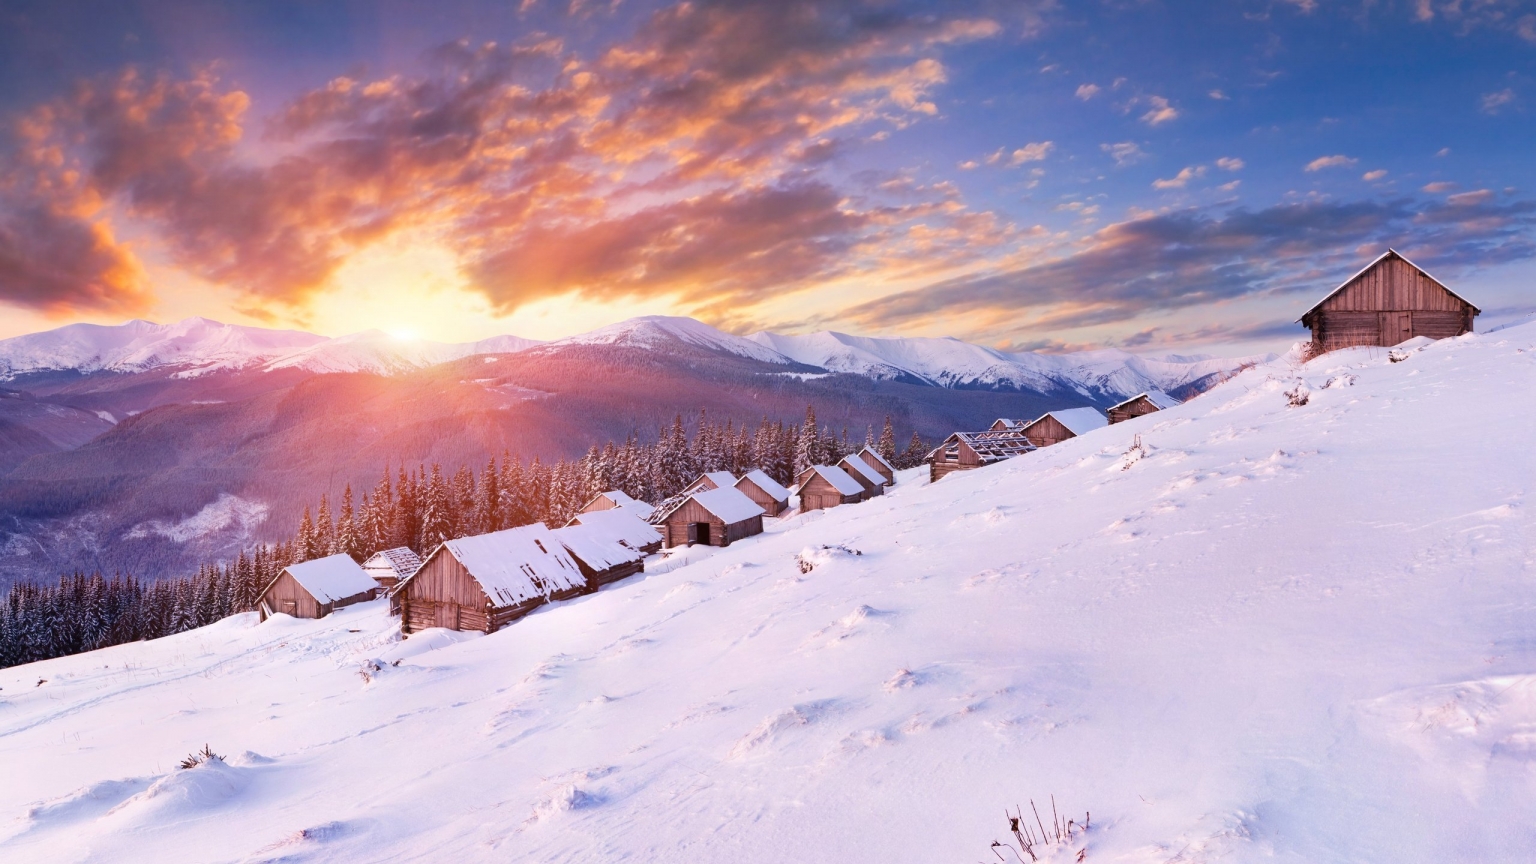 Winter Beautiful Sunset for 1536 x 864 HDTV resolution